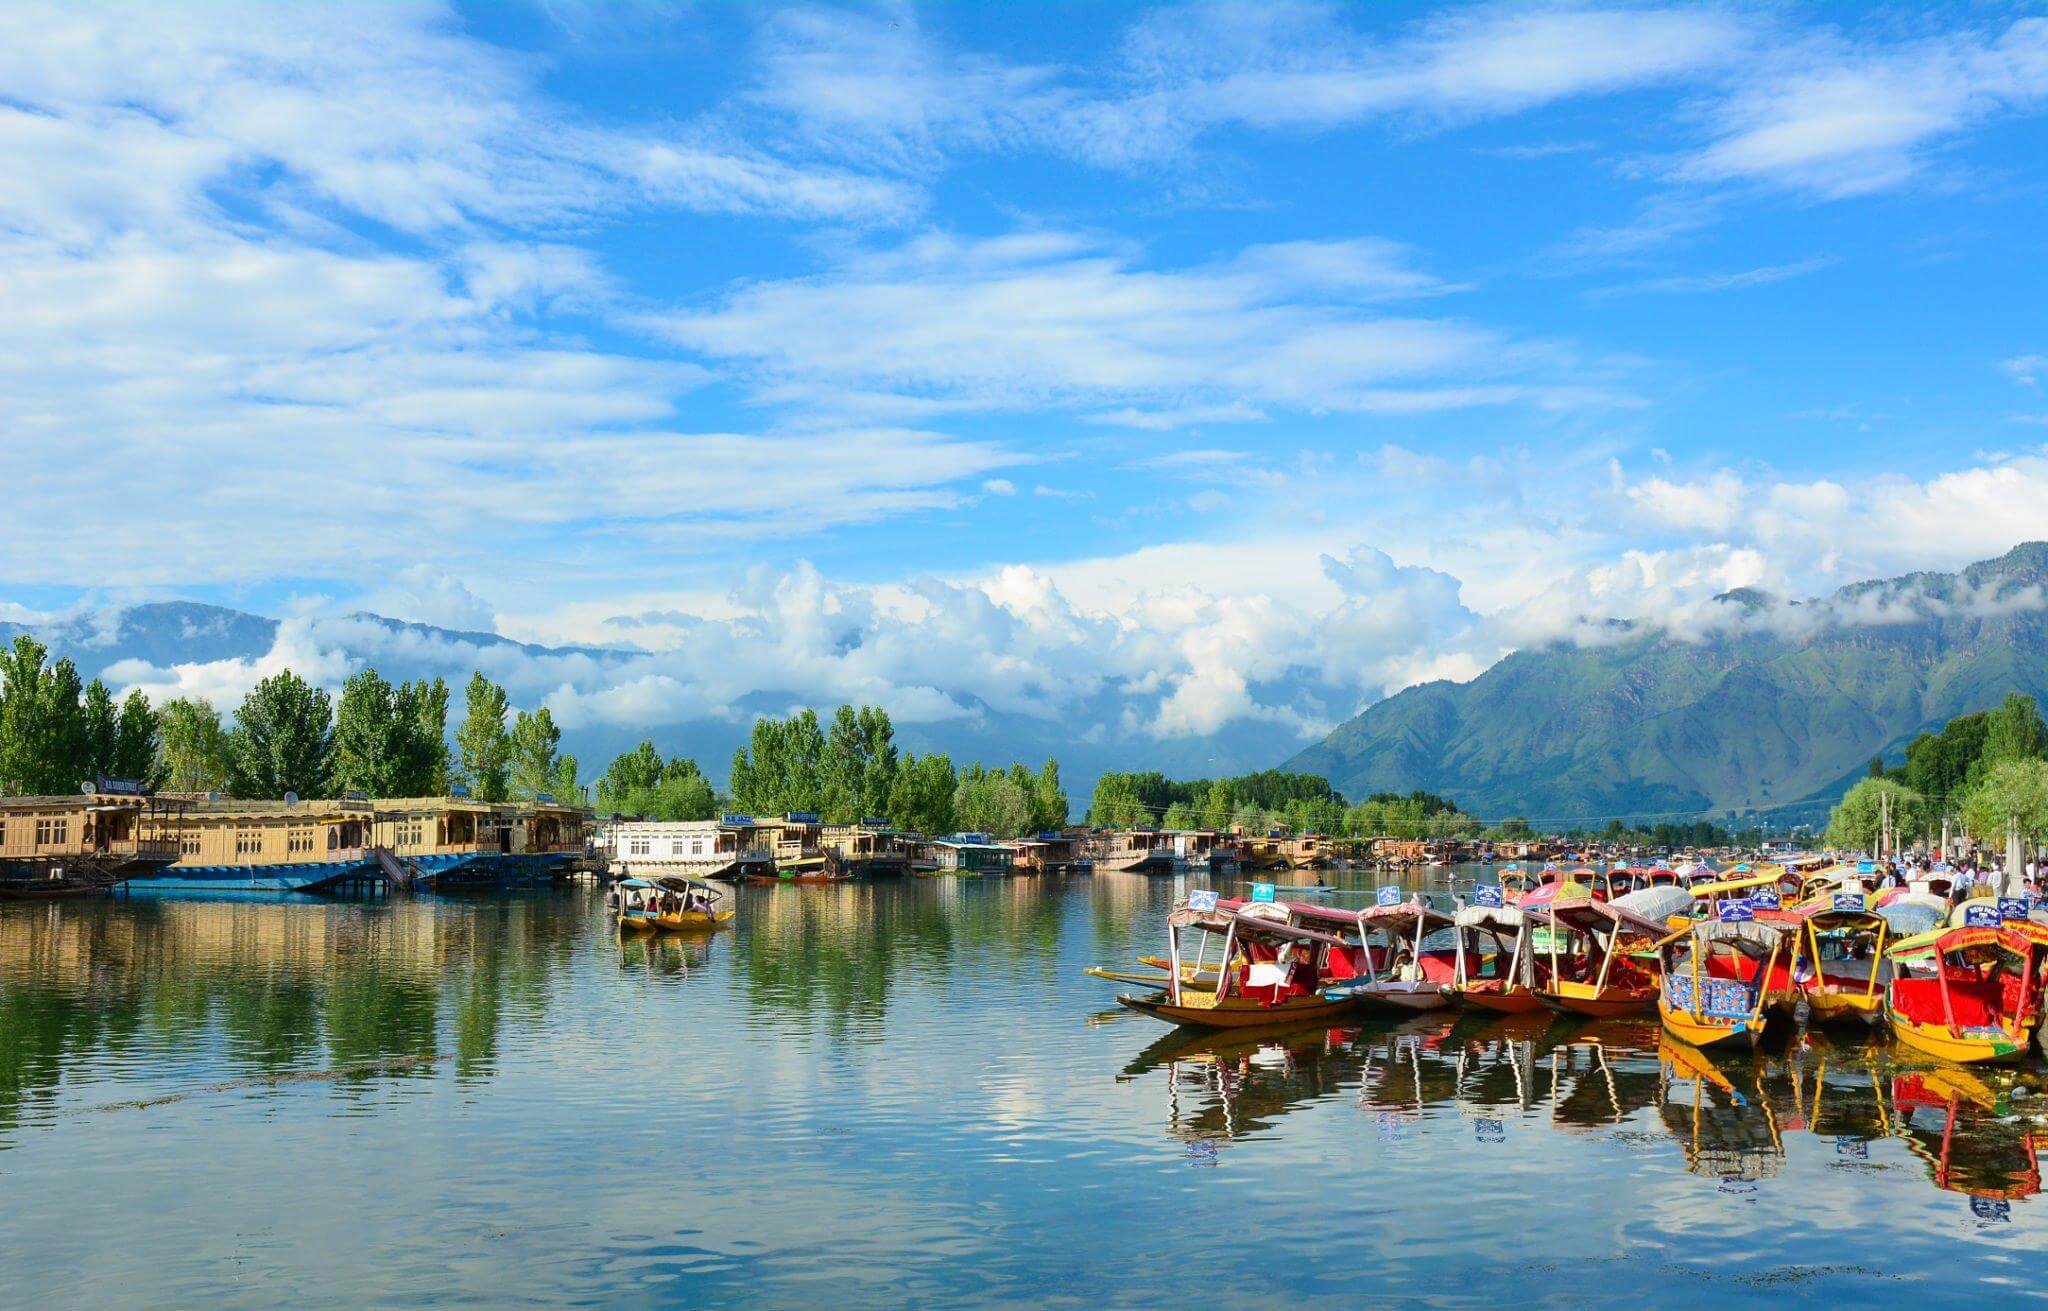 Kashmir Tour Package: Explore the Paradise on Earth